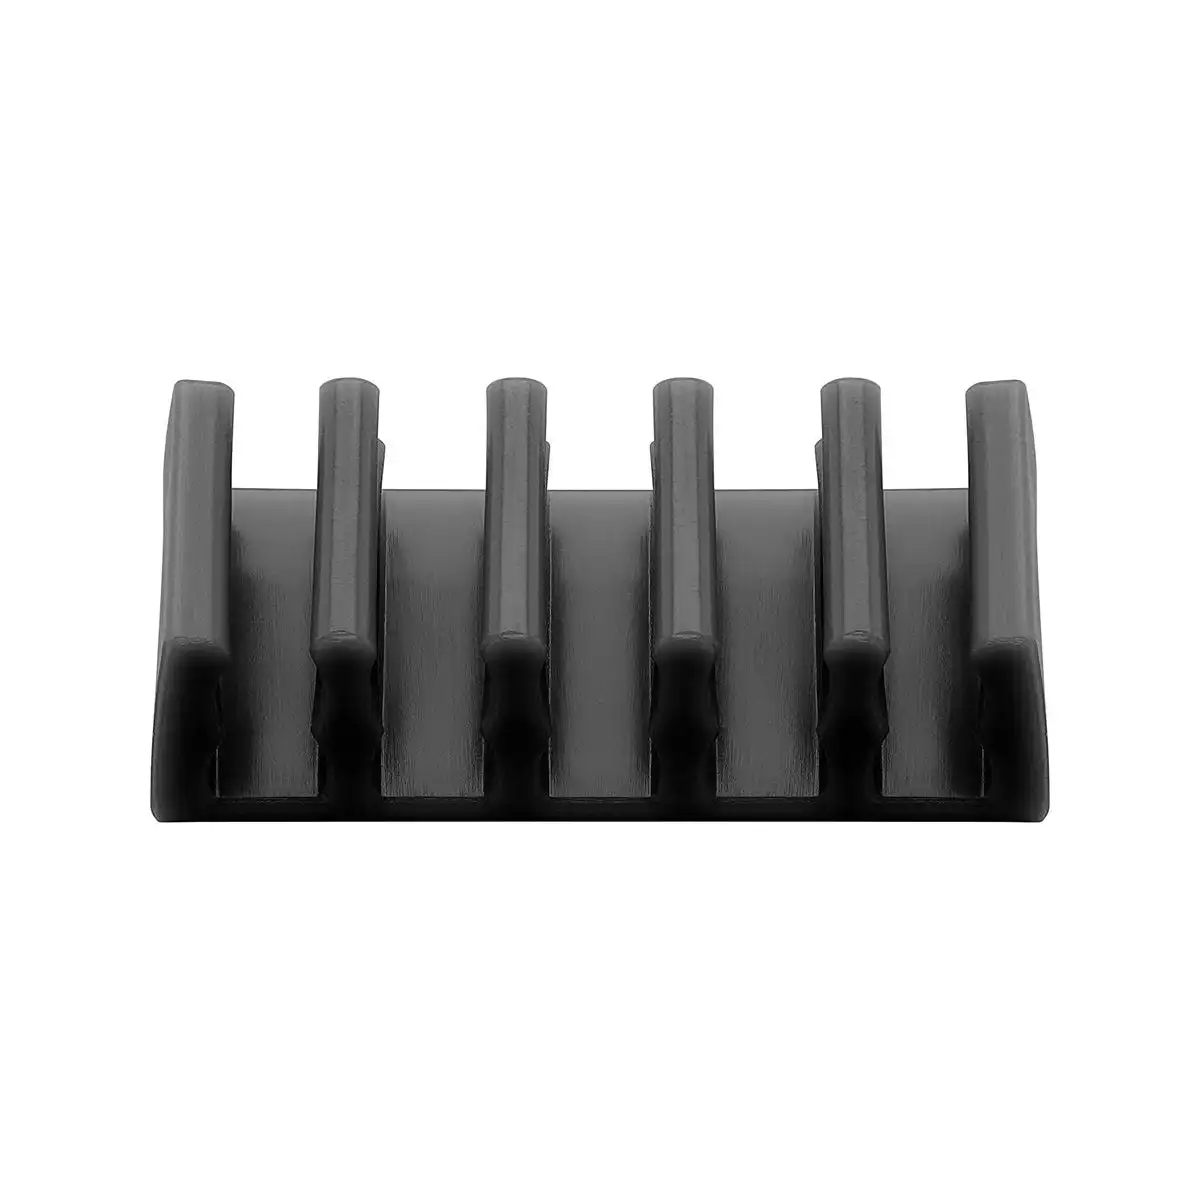 Goobay Cable Management 5 Slots Plastic - Black